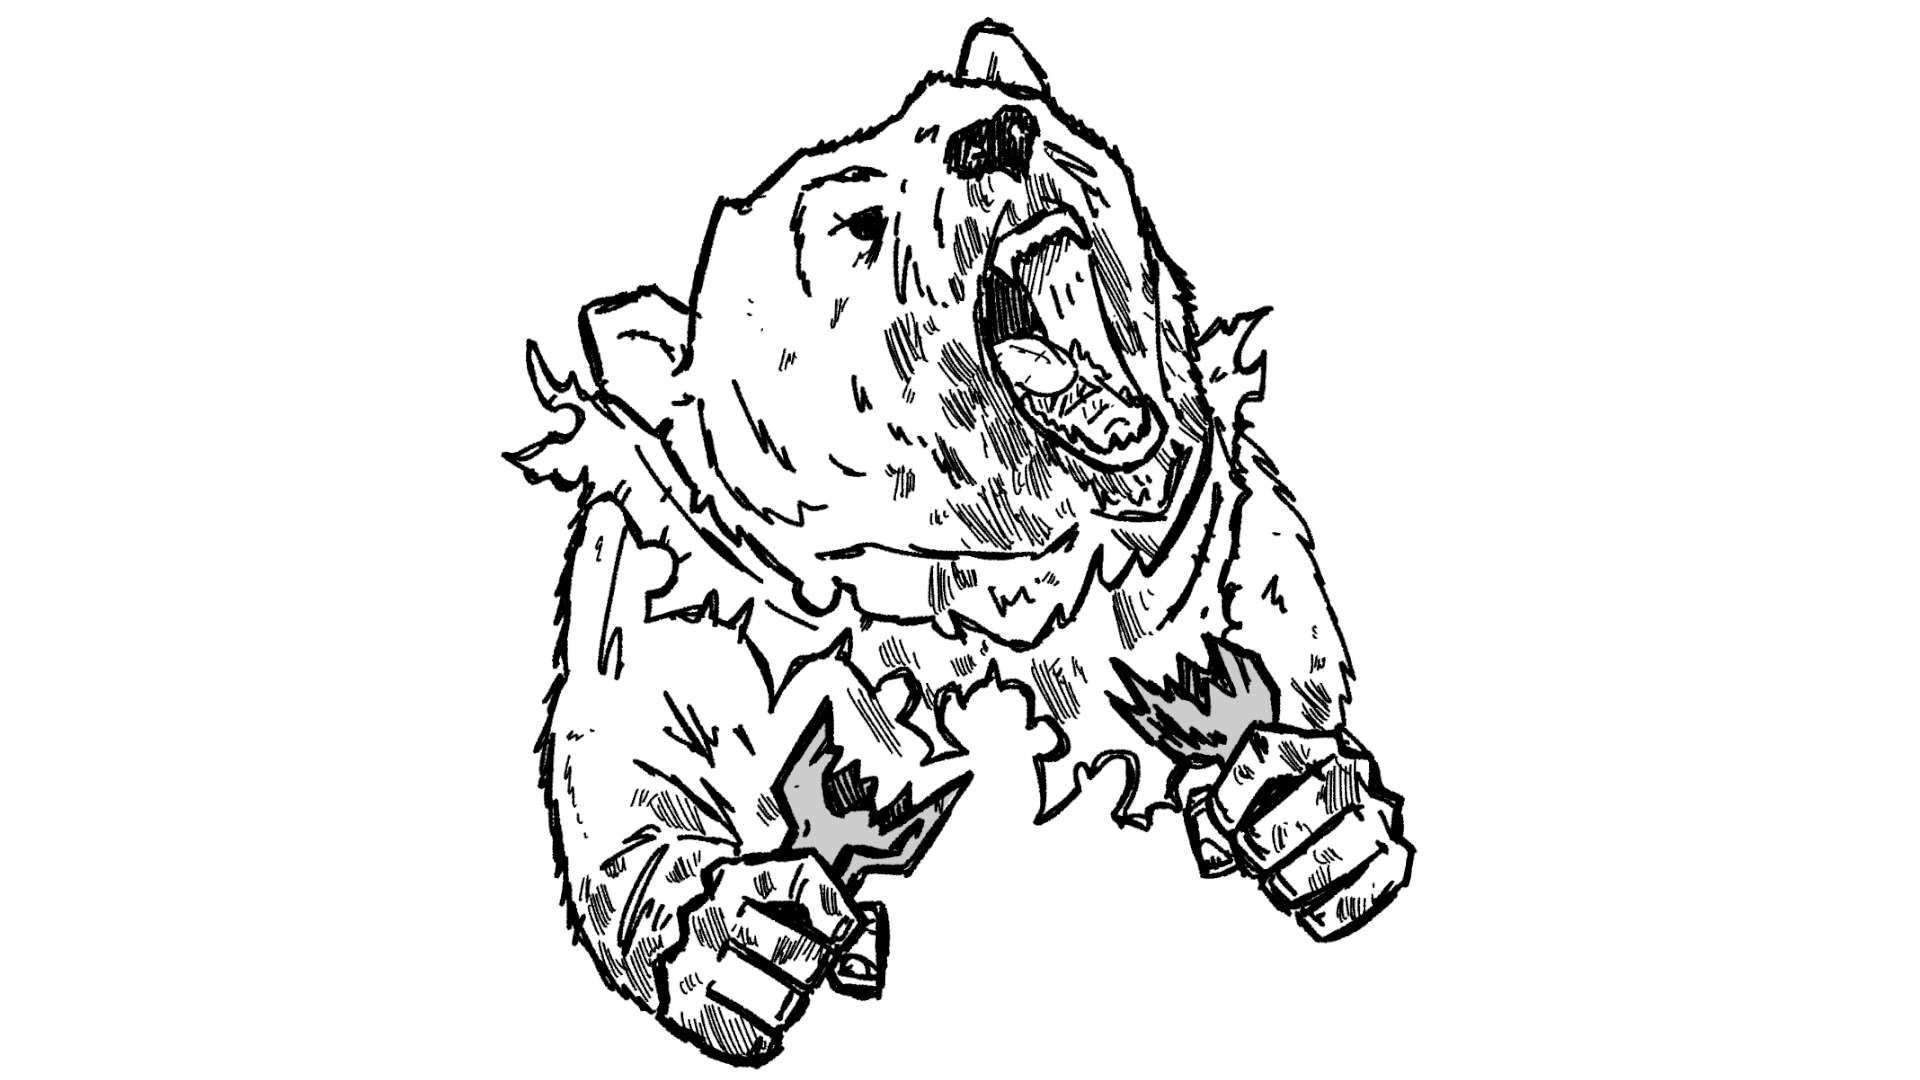 Old school DnD Adventure against an evil Winnie the Pooh - a raging bear wielding broken bottles in his two human hands